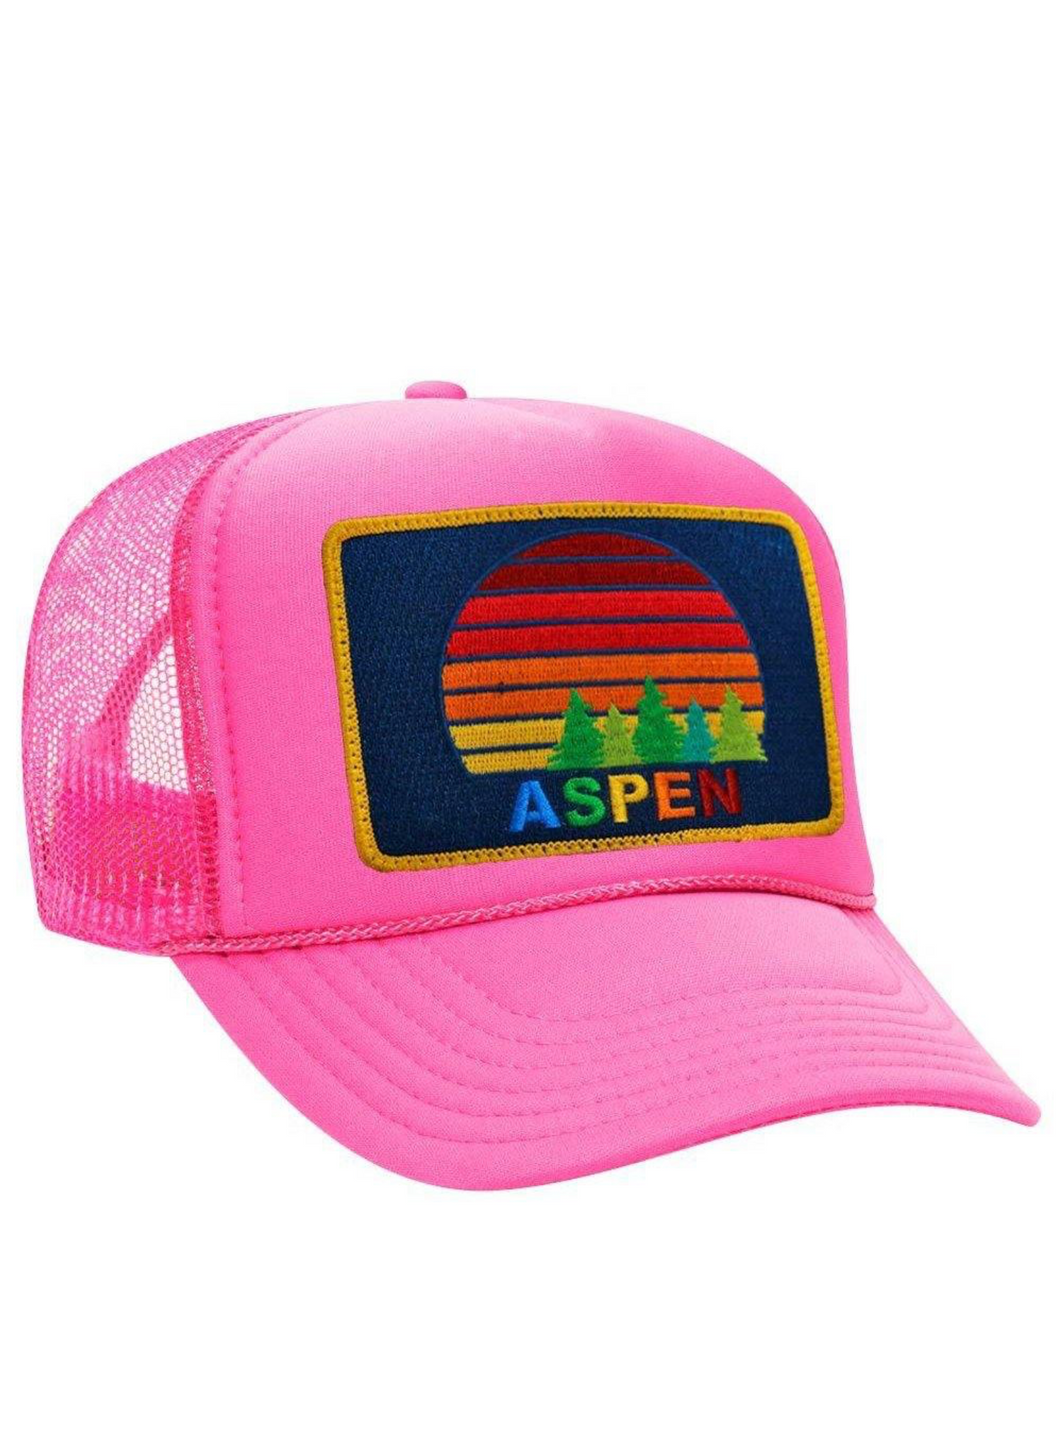 Aviator Nation Aspen Sunset Trucker Hat in Neon Pink